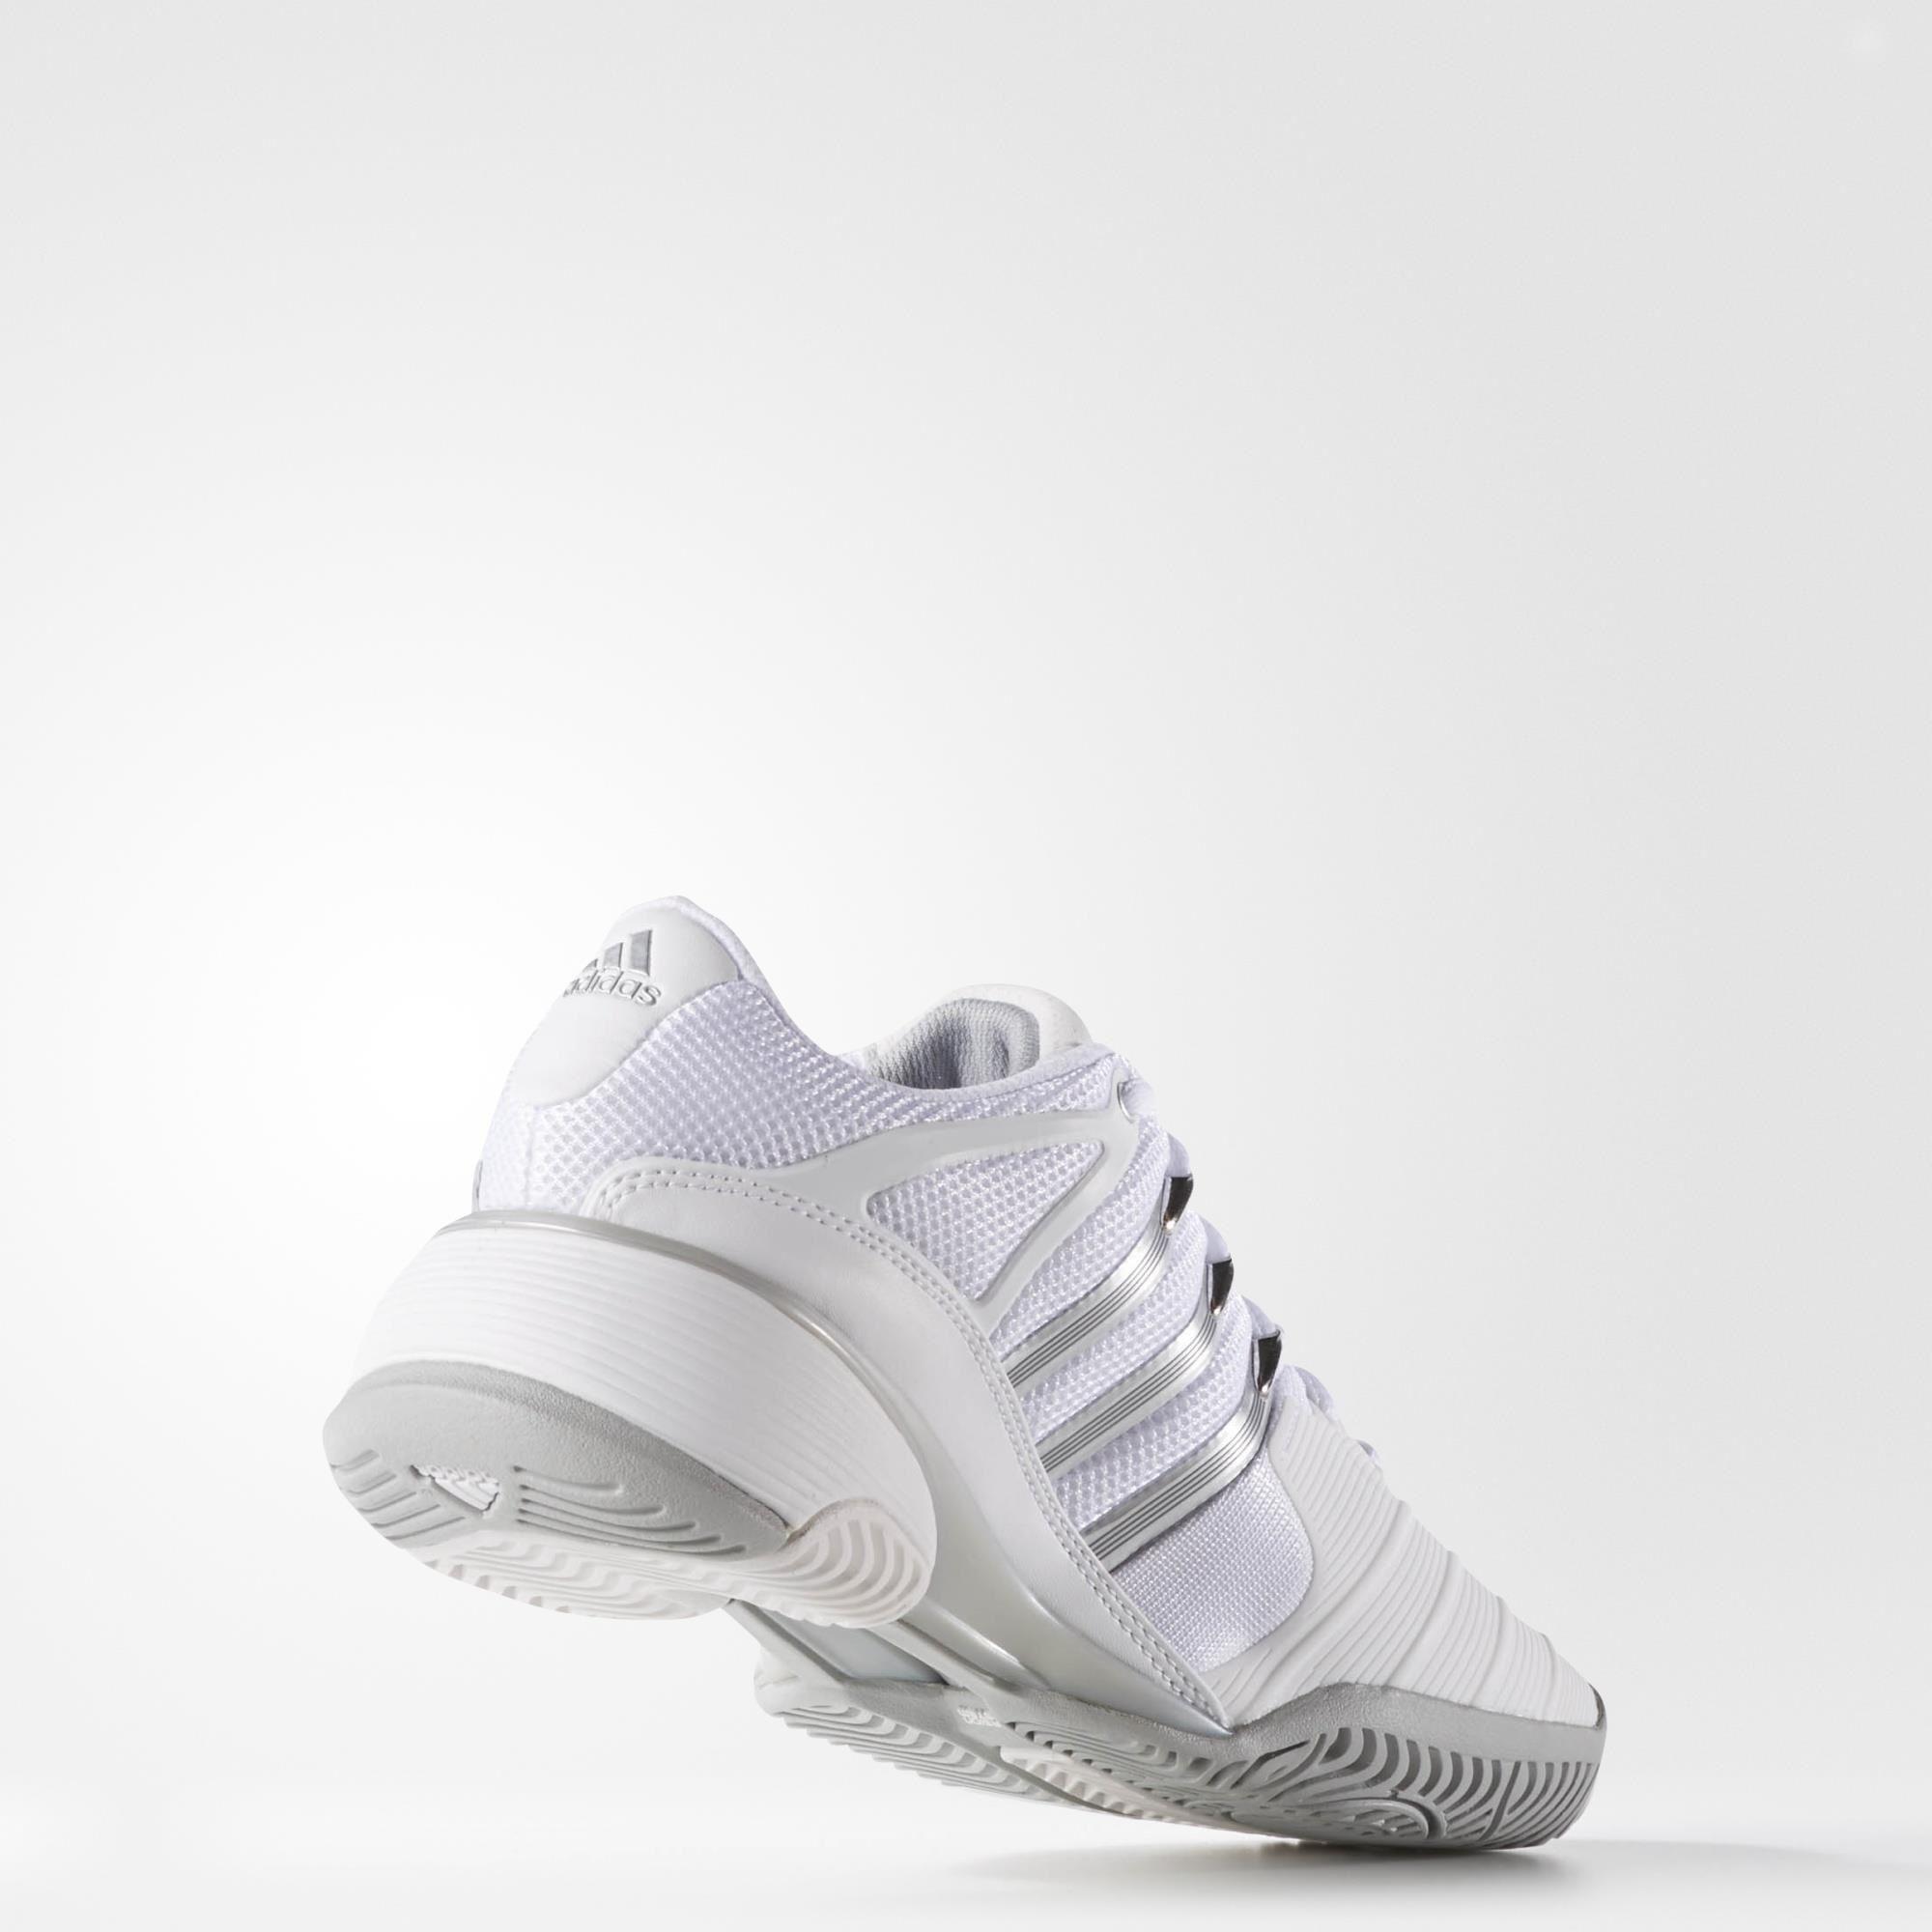 Adidas tennis shoes uk